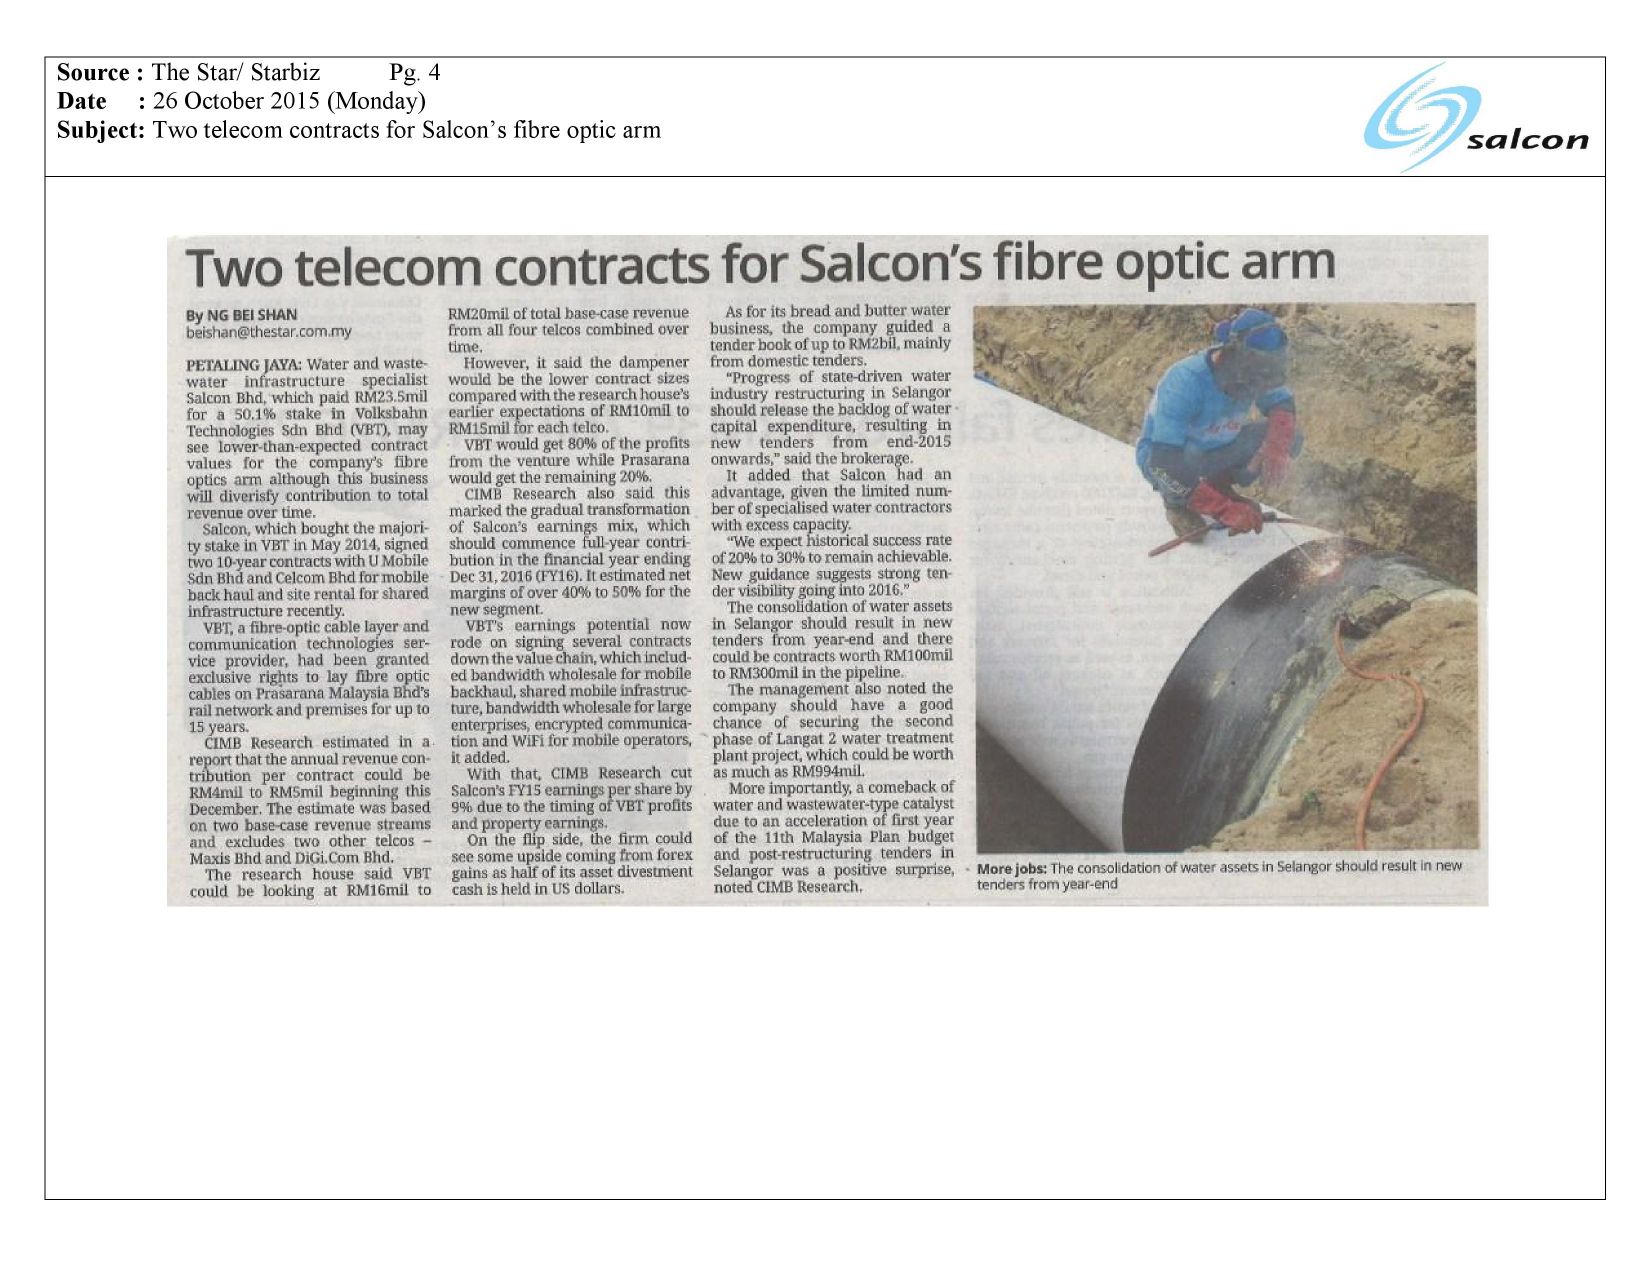 Two telecom contracts for Salcon’s fibre optic arm